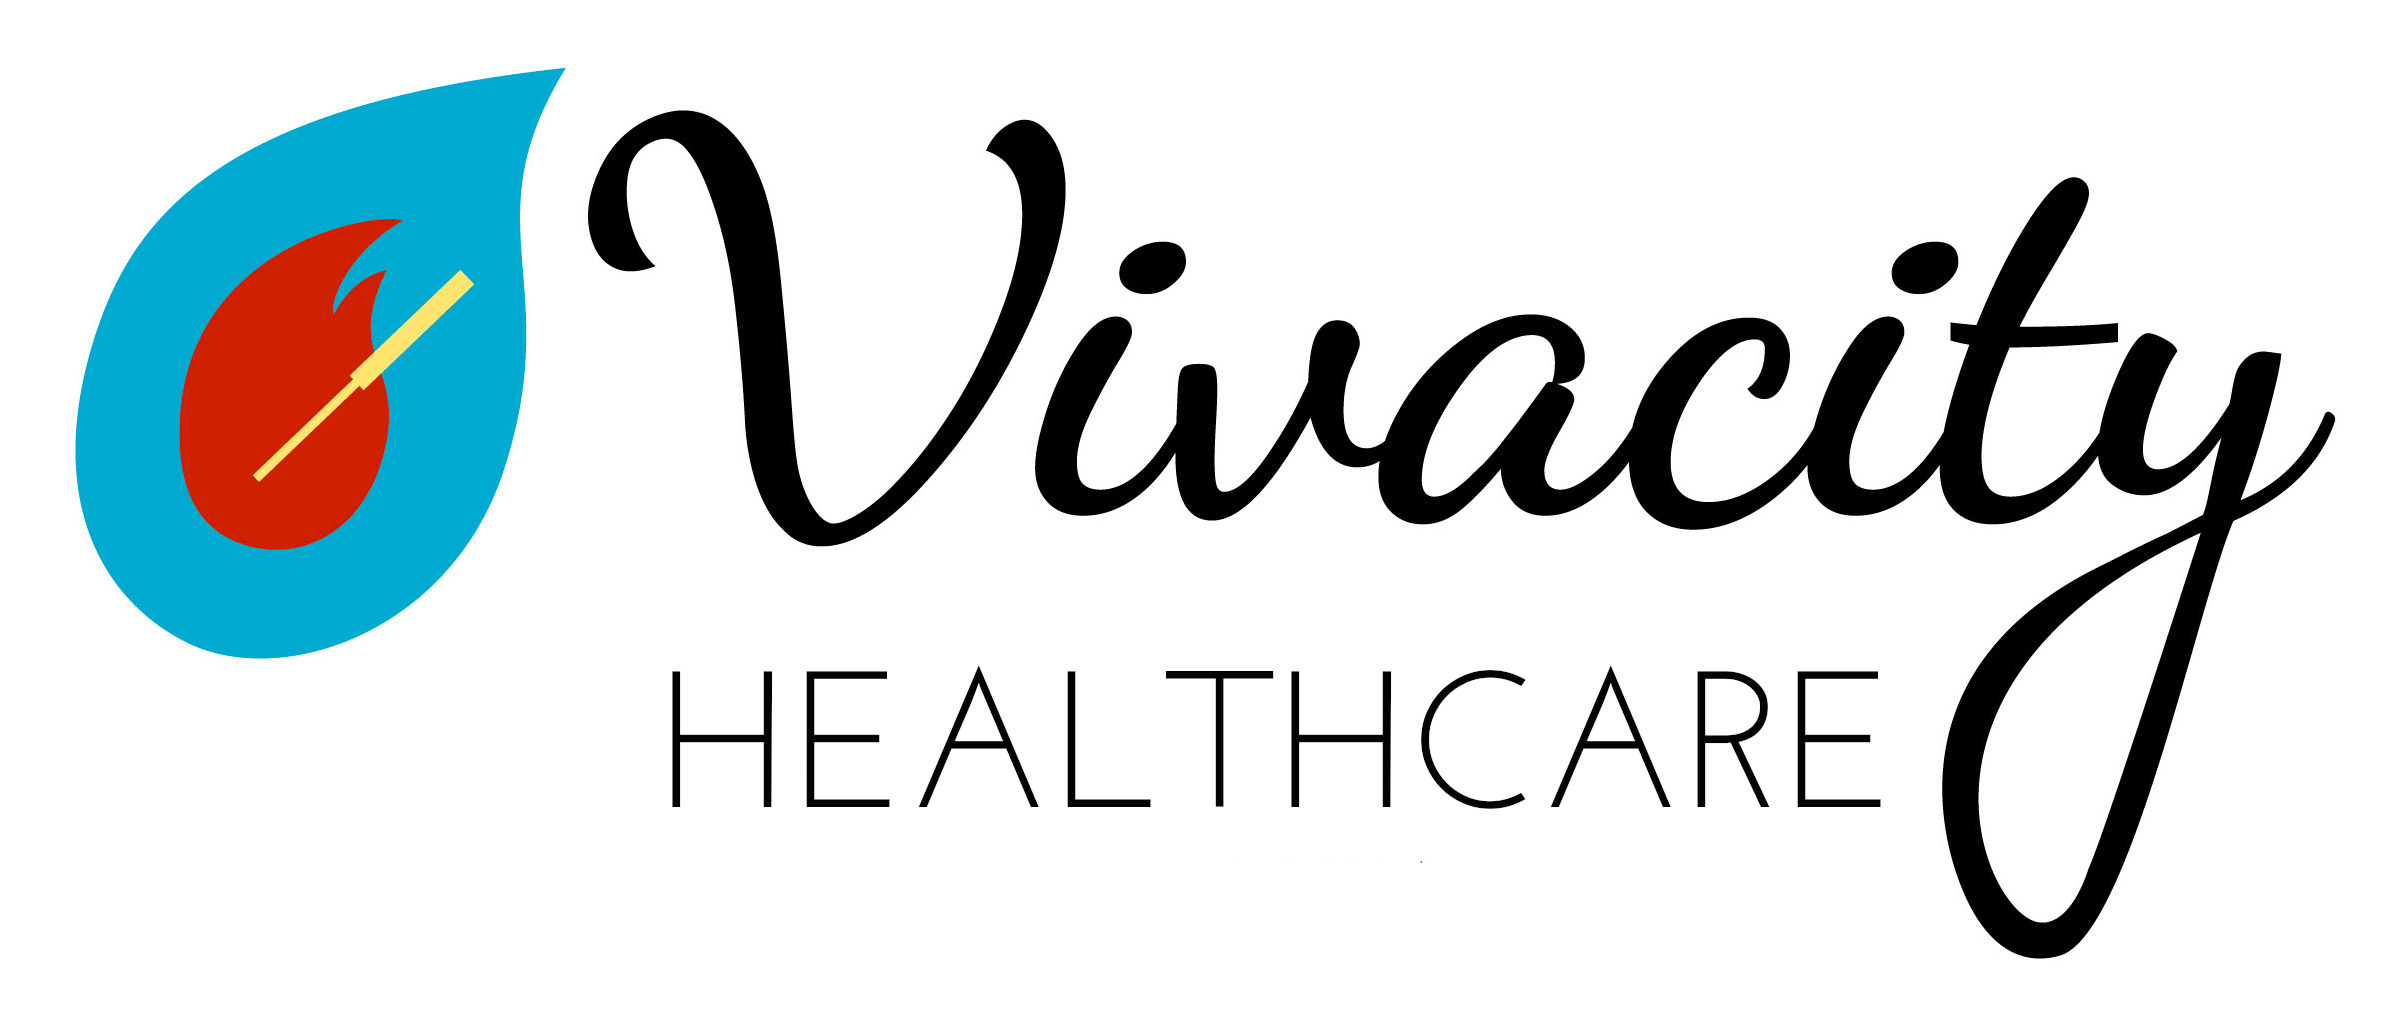 Vivacity Healthcare: Union Square, NYC